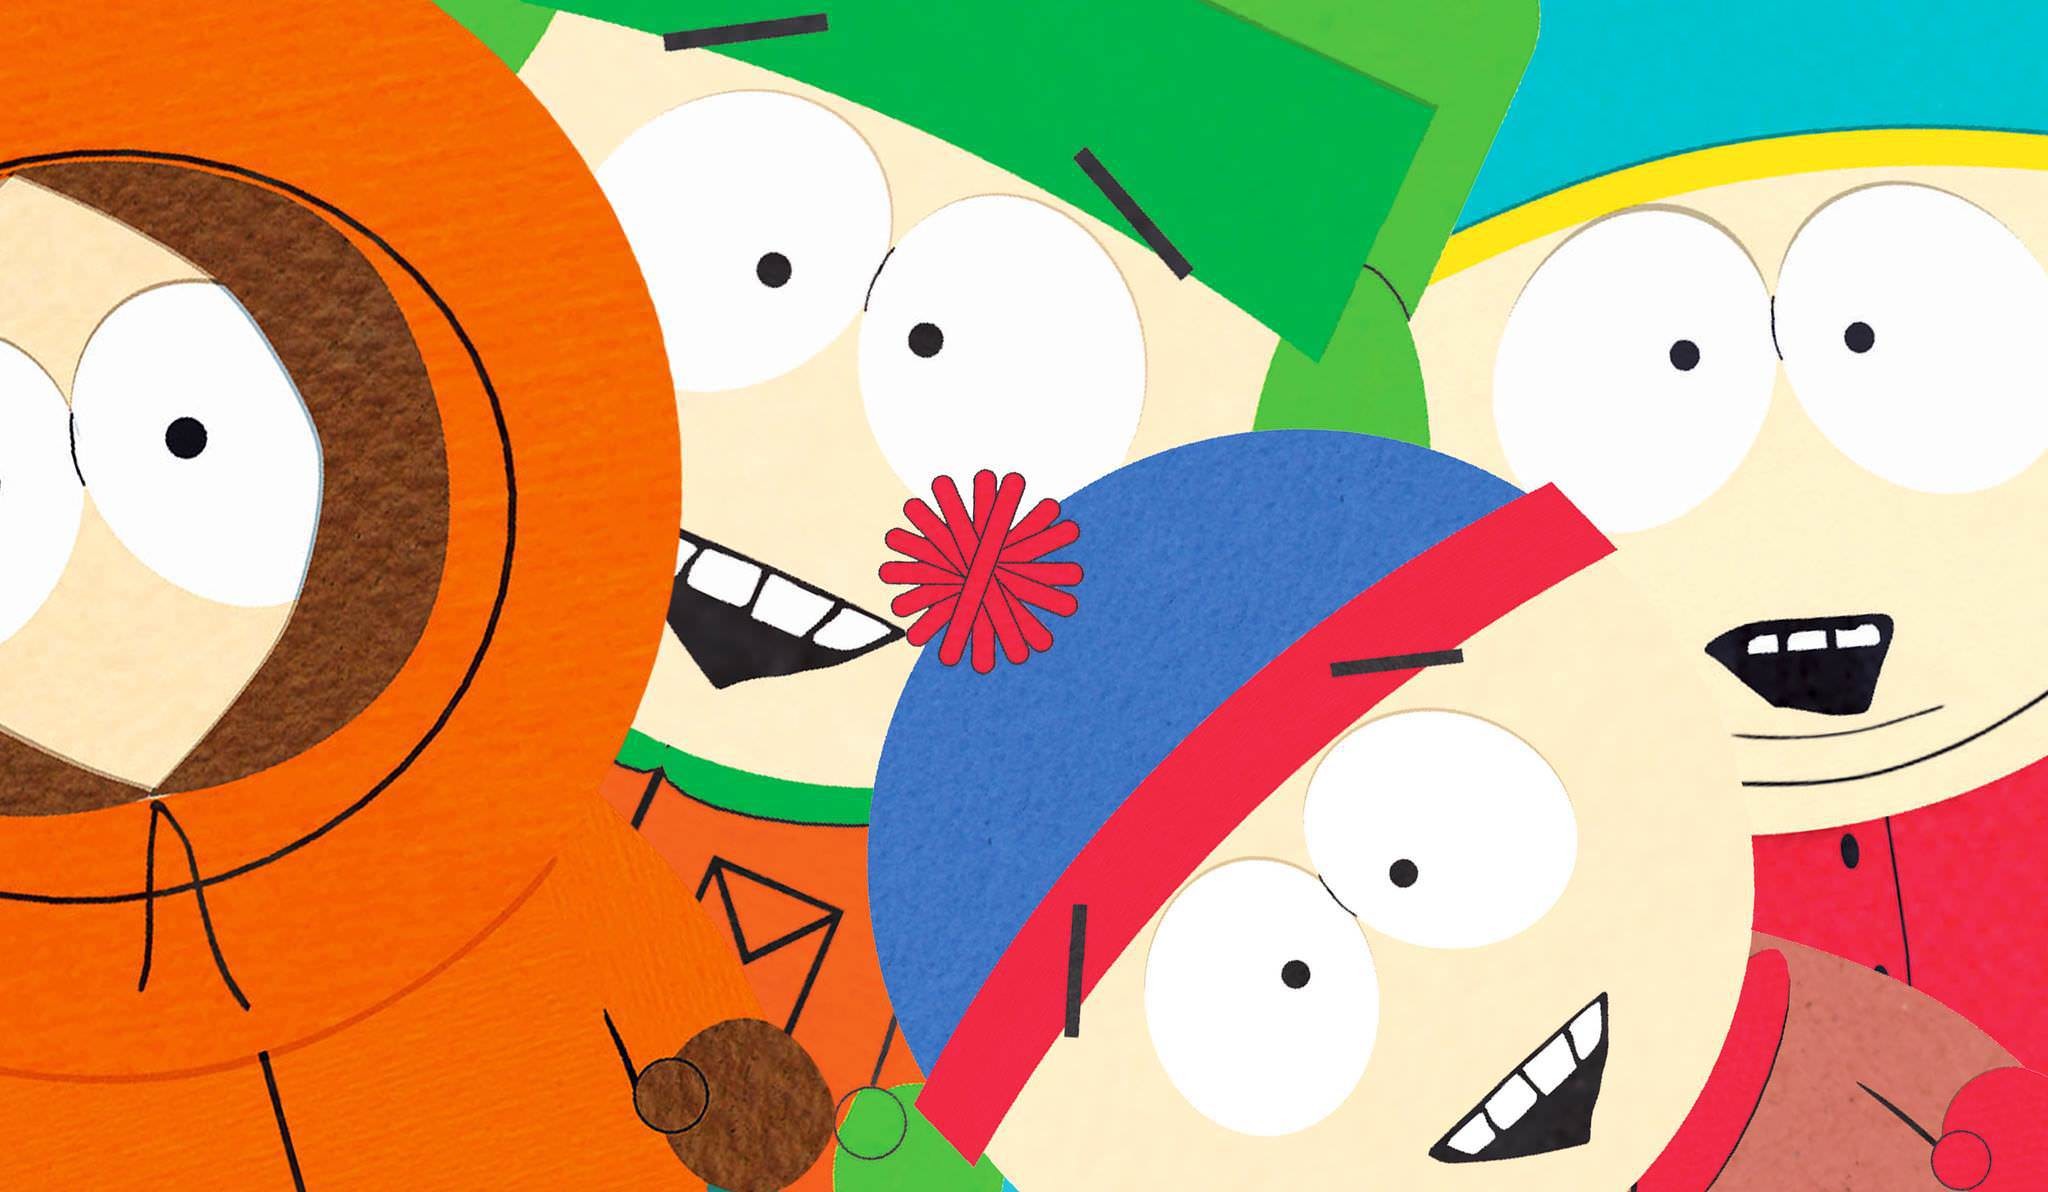 Kenny South Park Wallpaper.